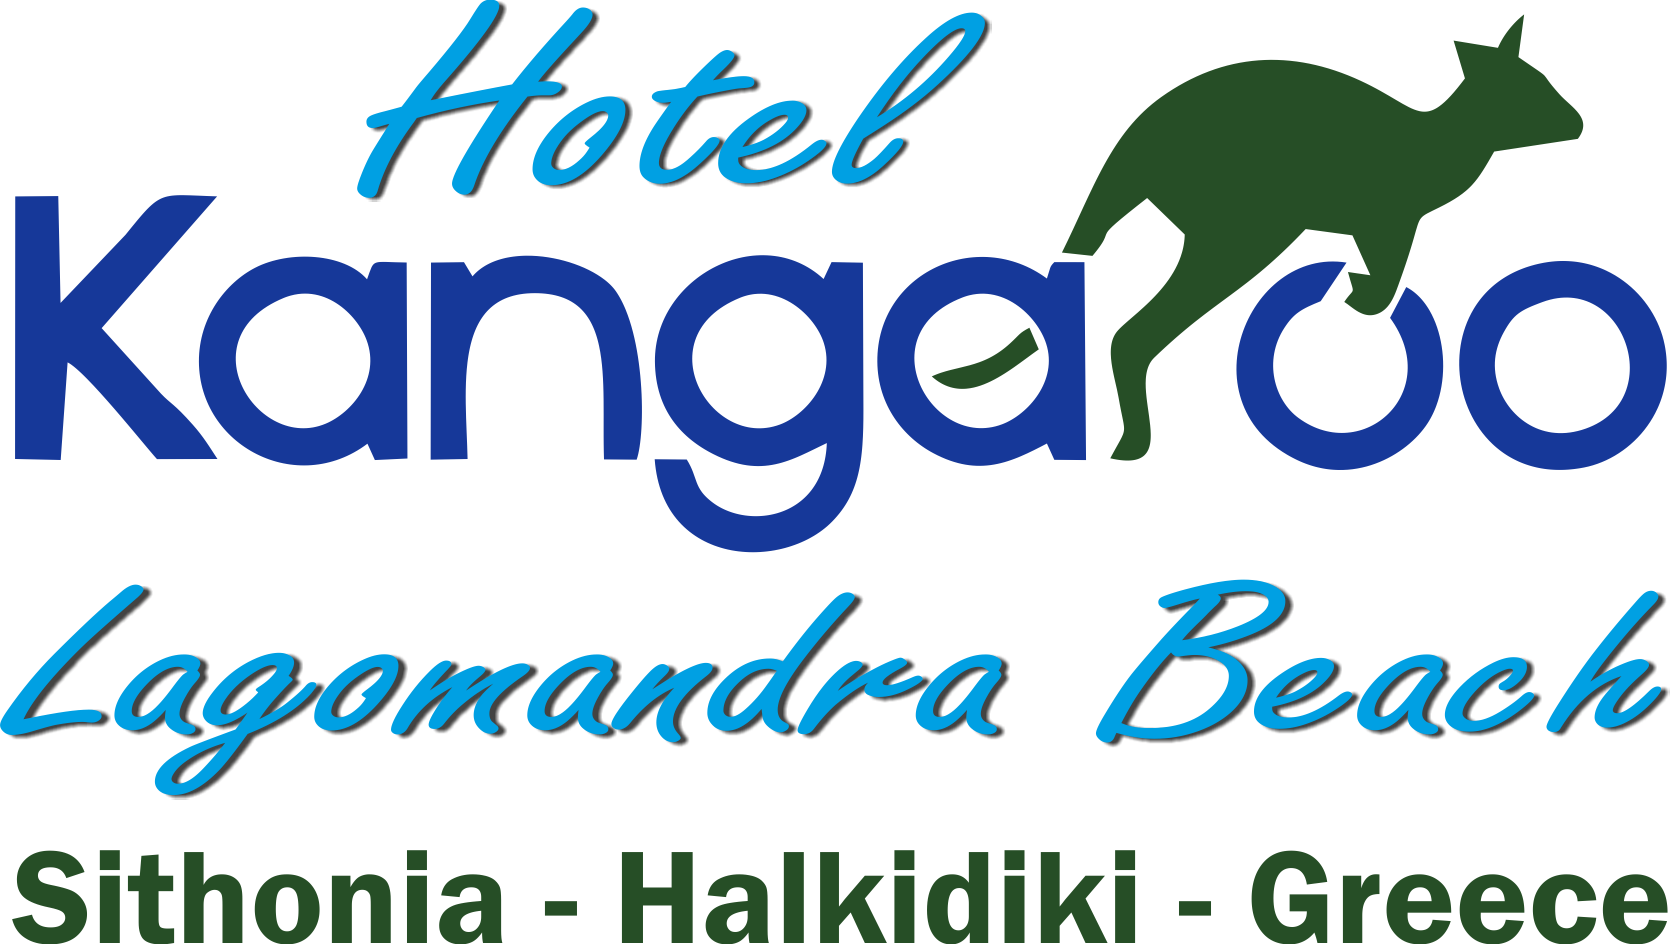 Hotel Kangaroo - Lagomandra Beach - Sithonia - Halkidiki - Greece